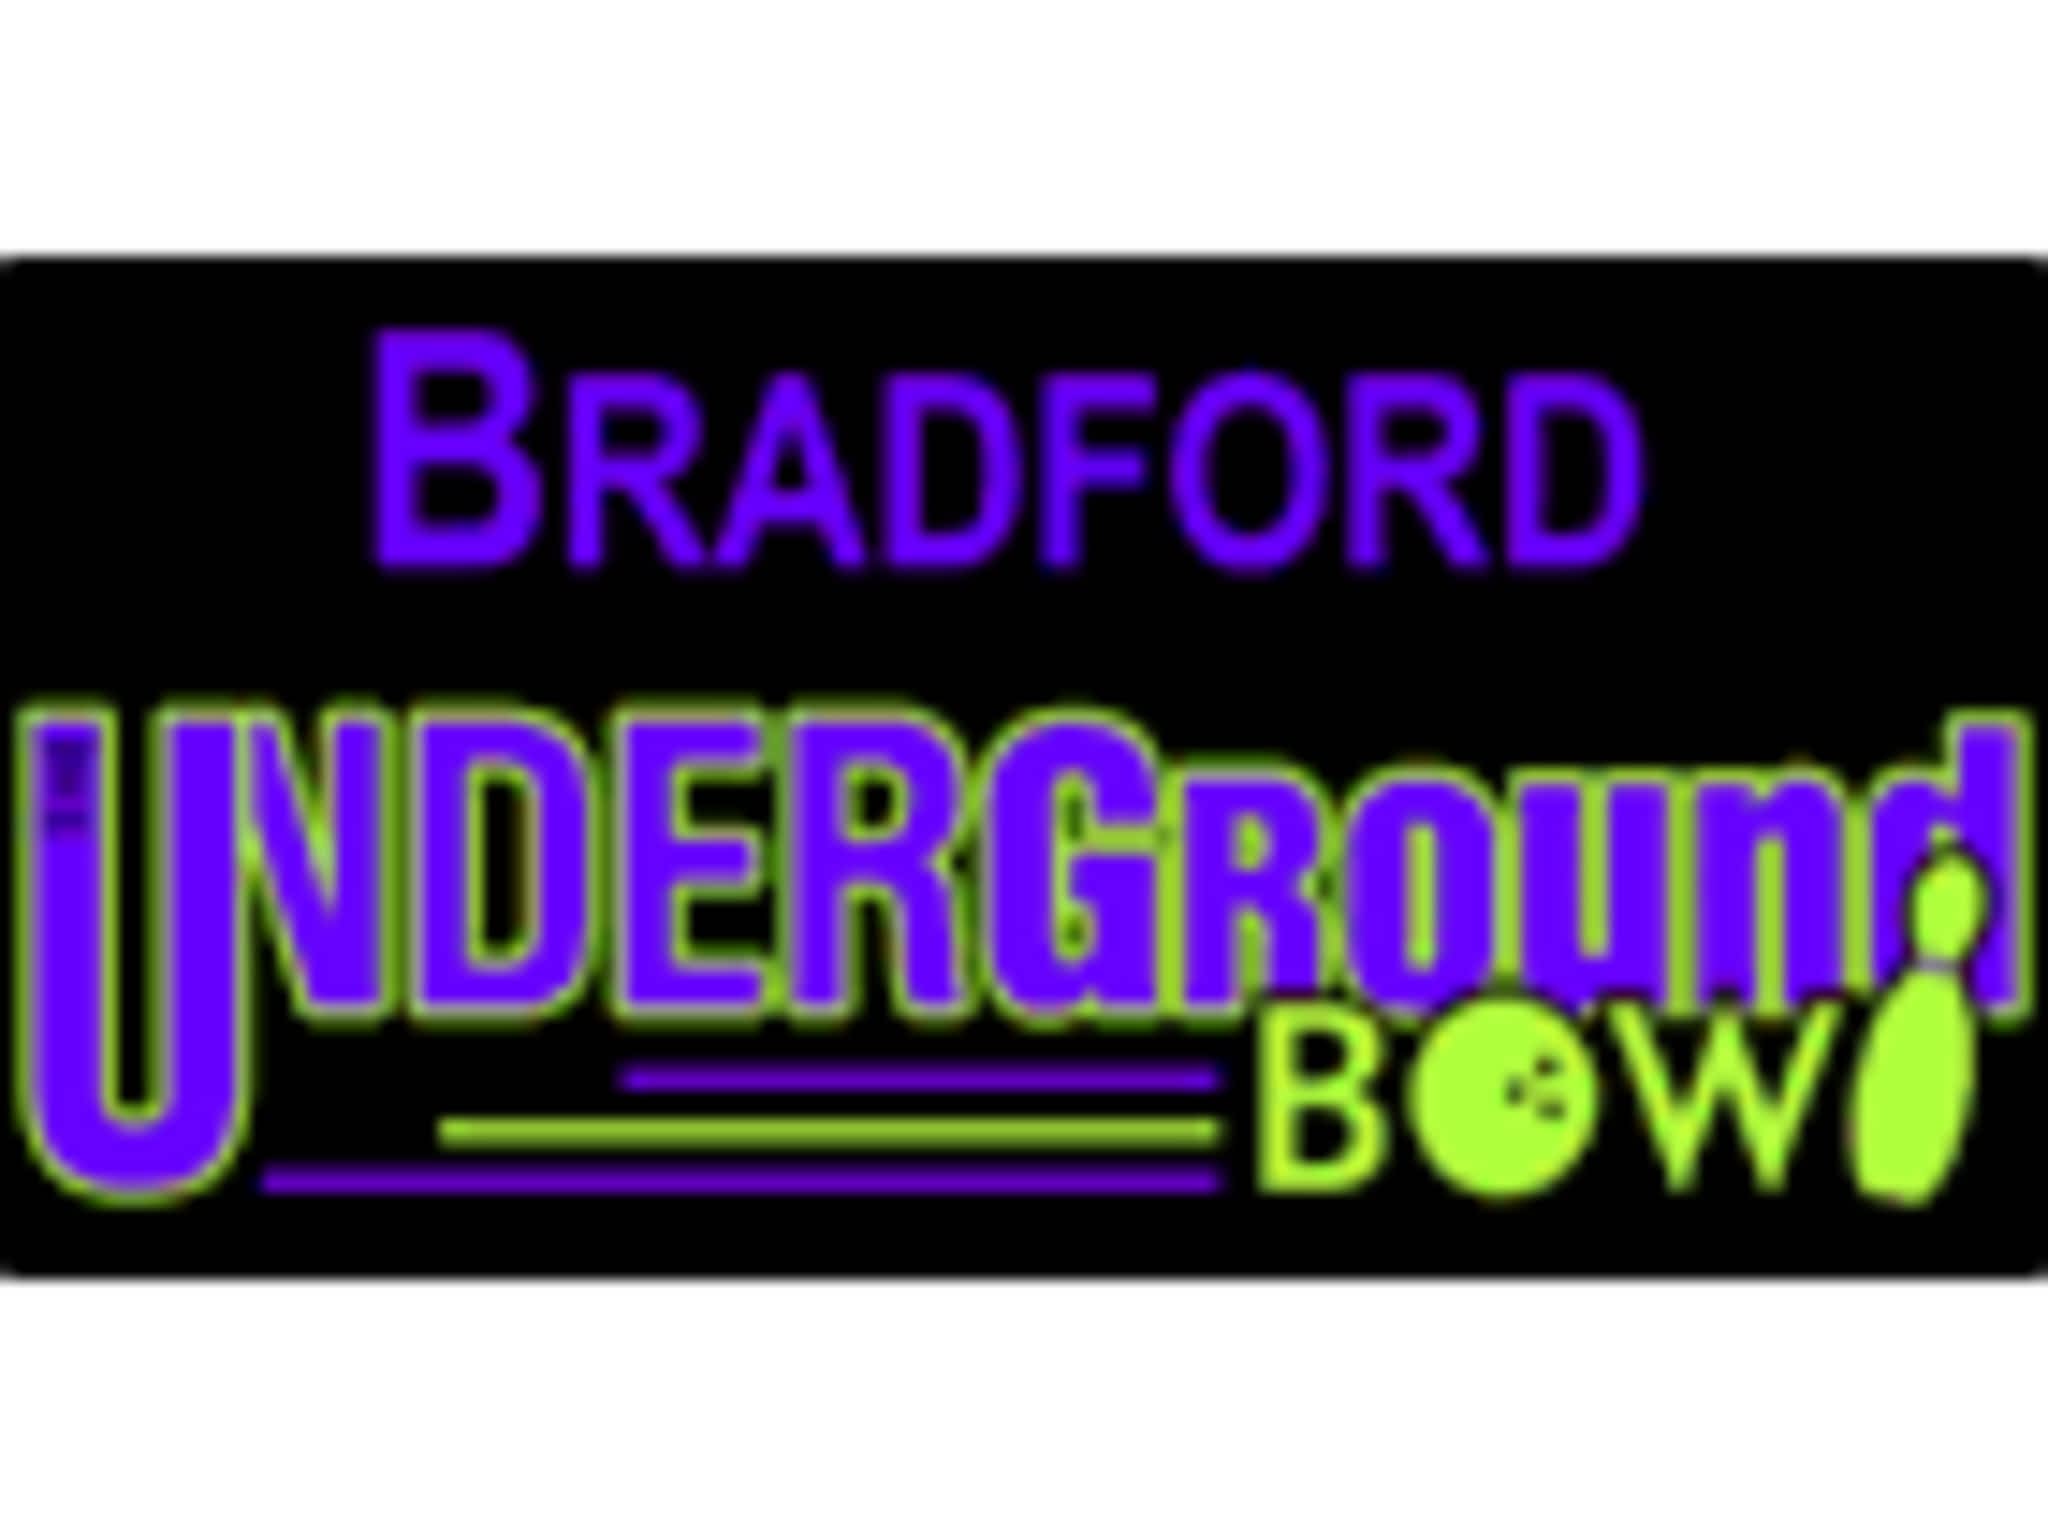 photo The Bradford Underground Bowl